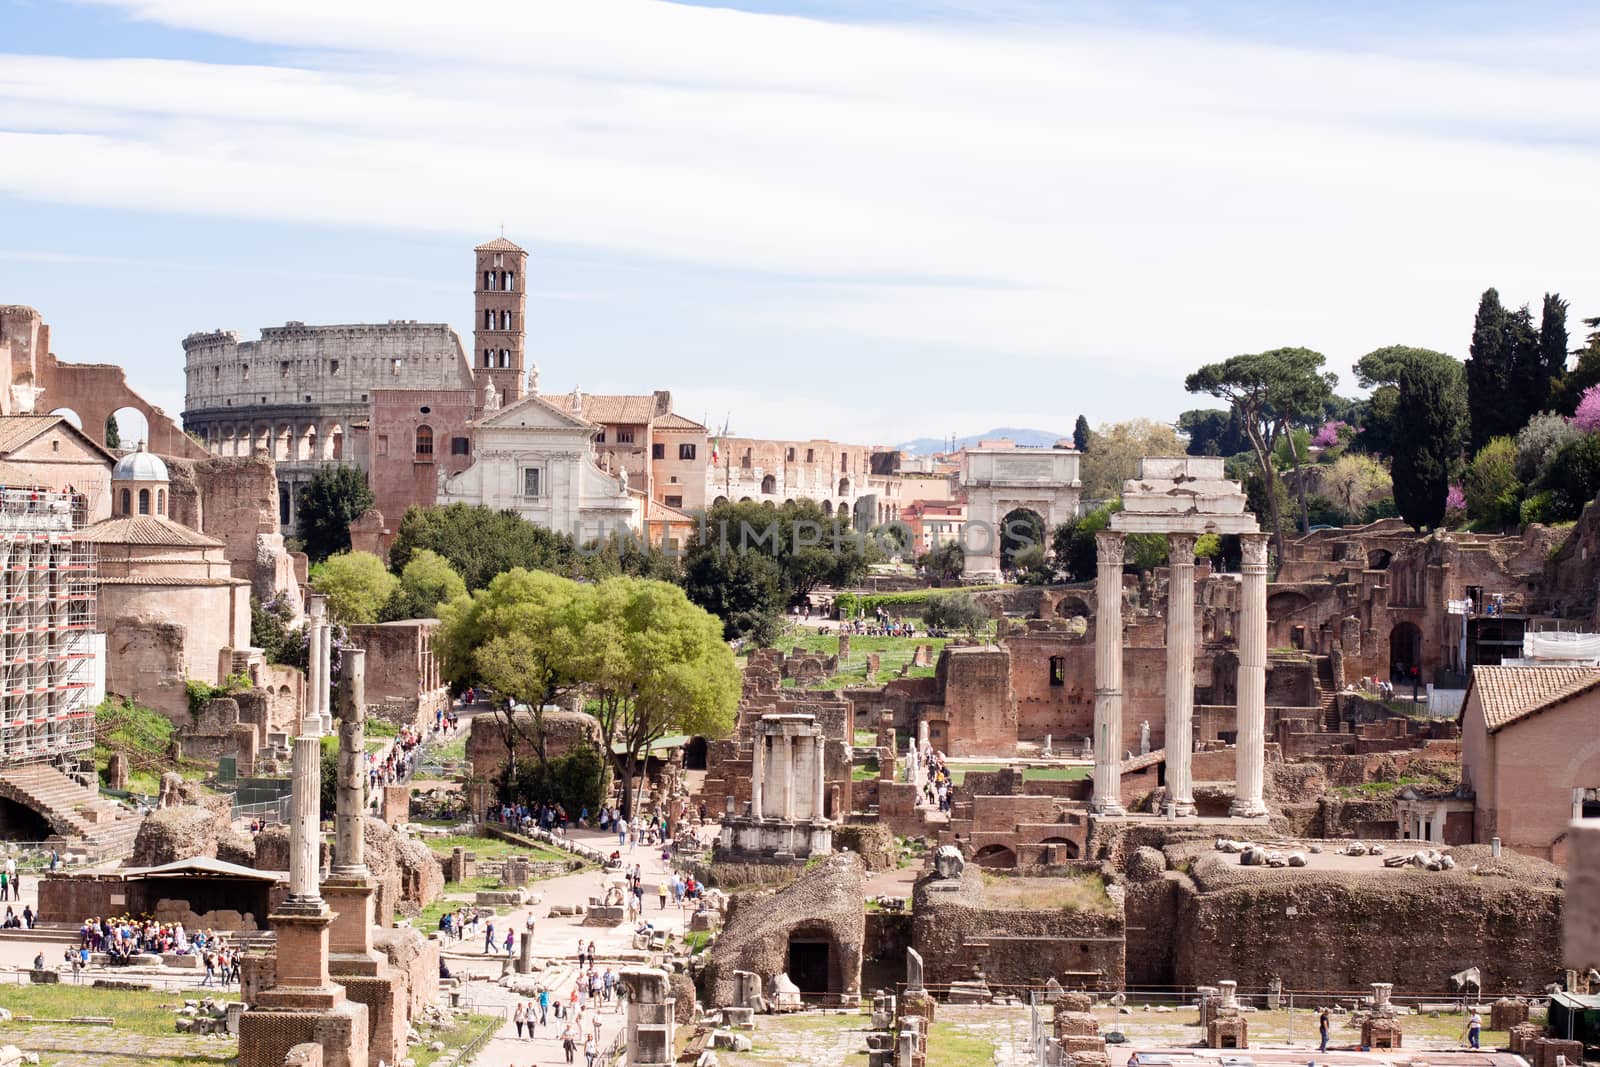 Old roman ruins in Roma
